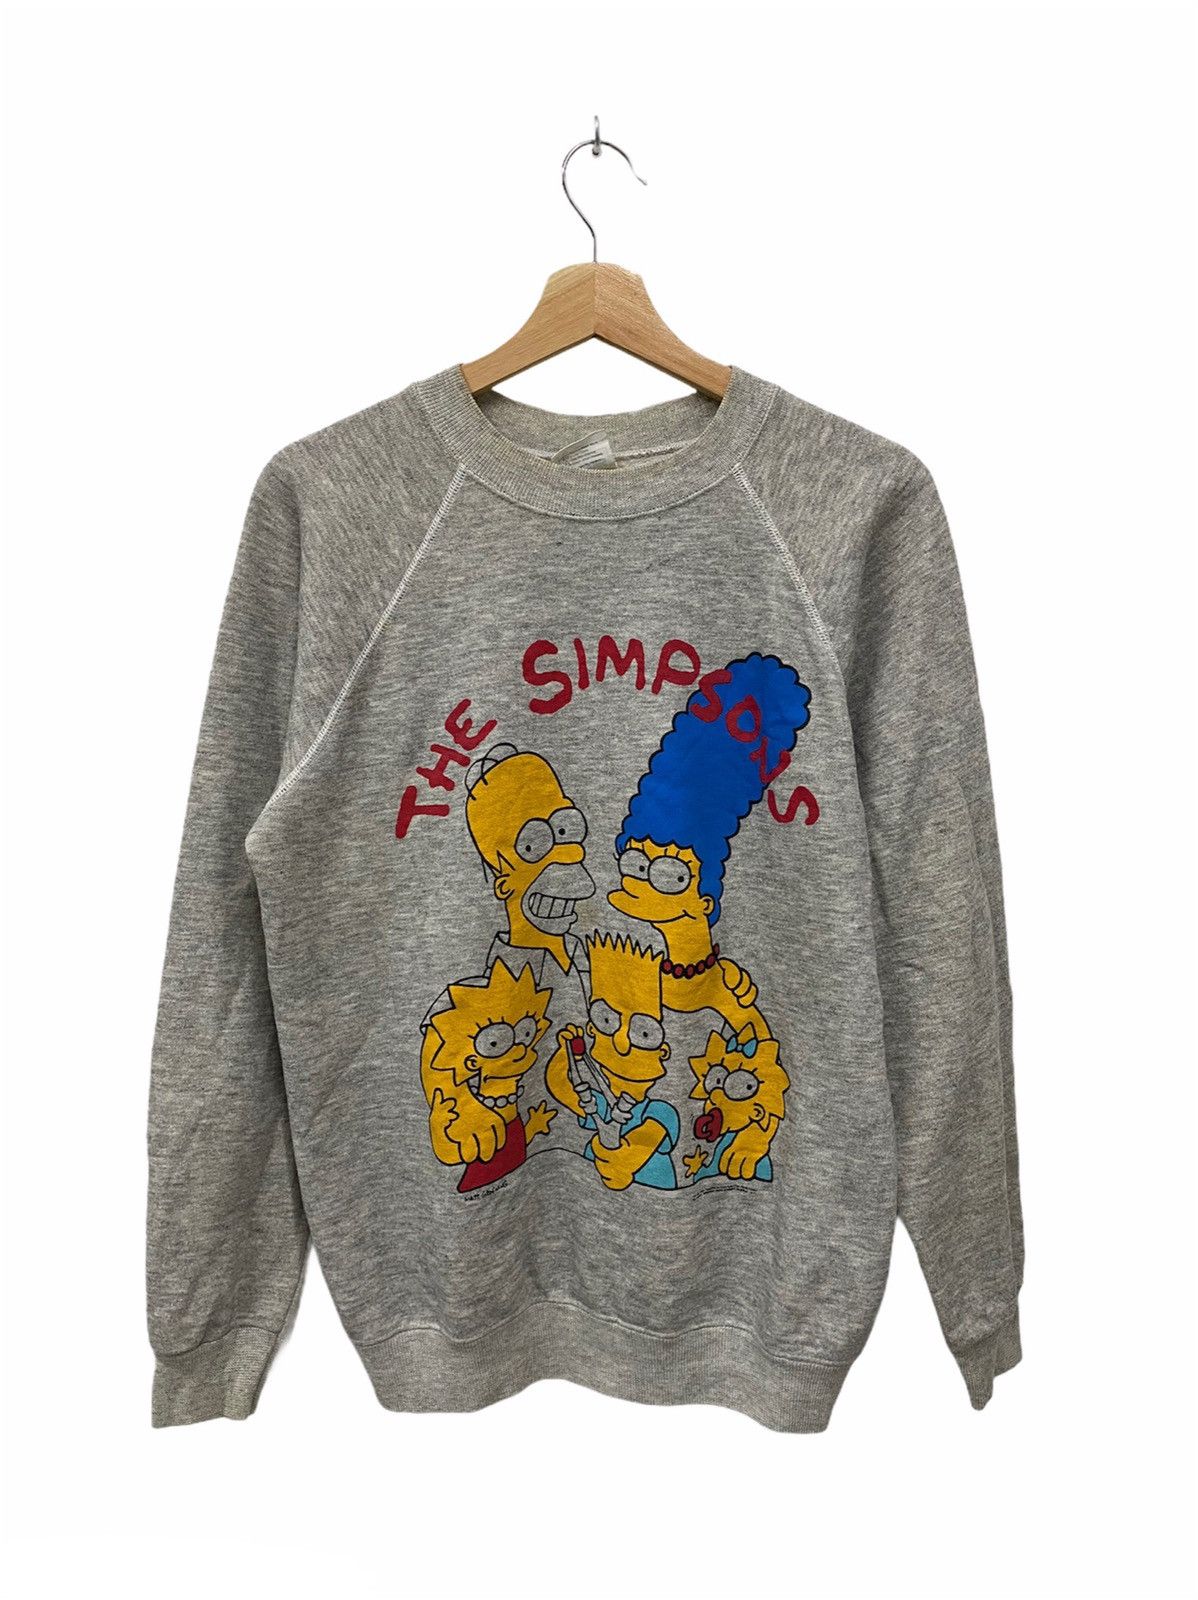 Vintage 80s The Simpsons Matt Groening Sweatshirt - 1